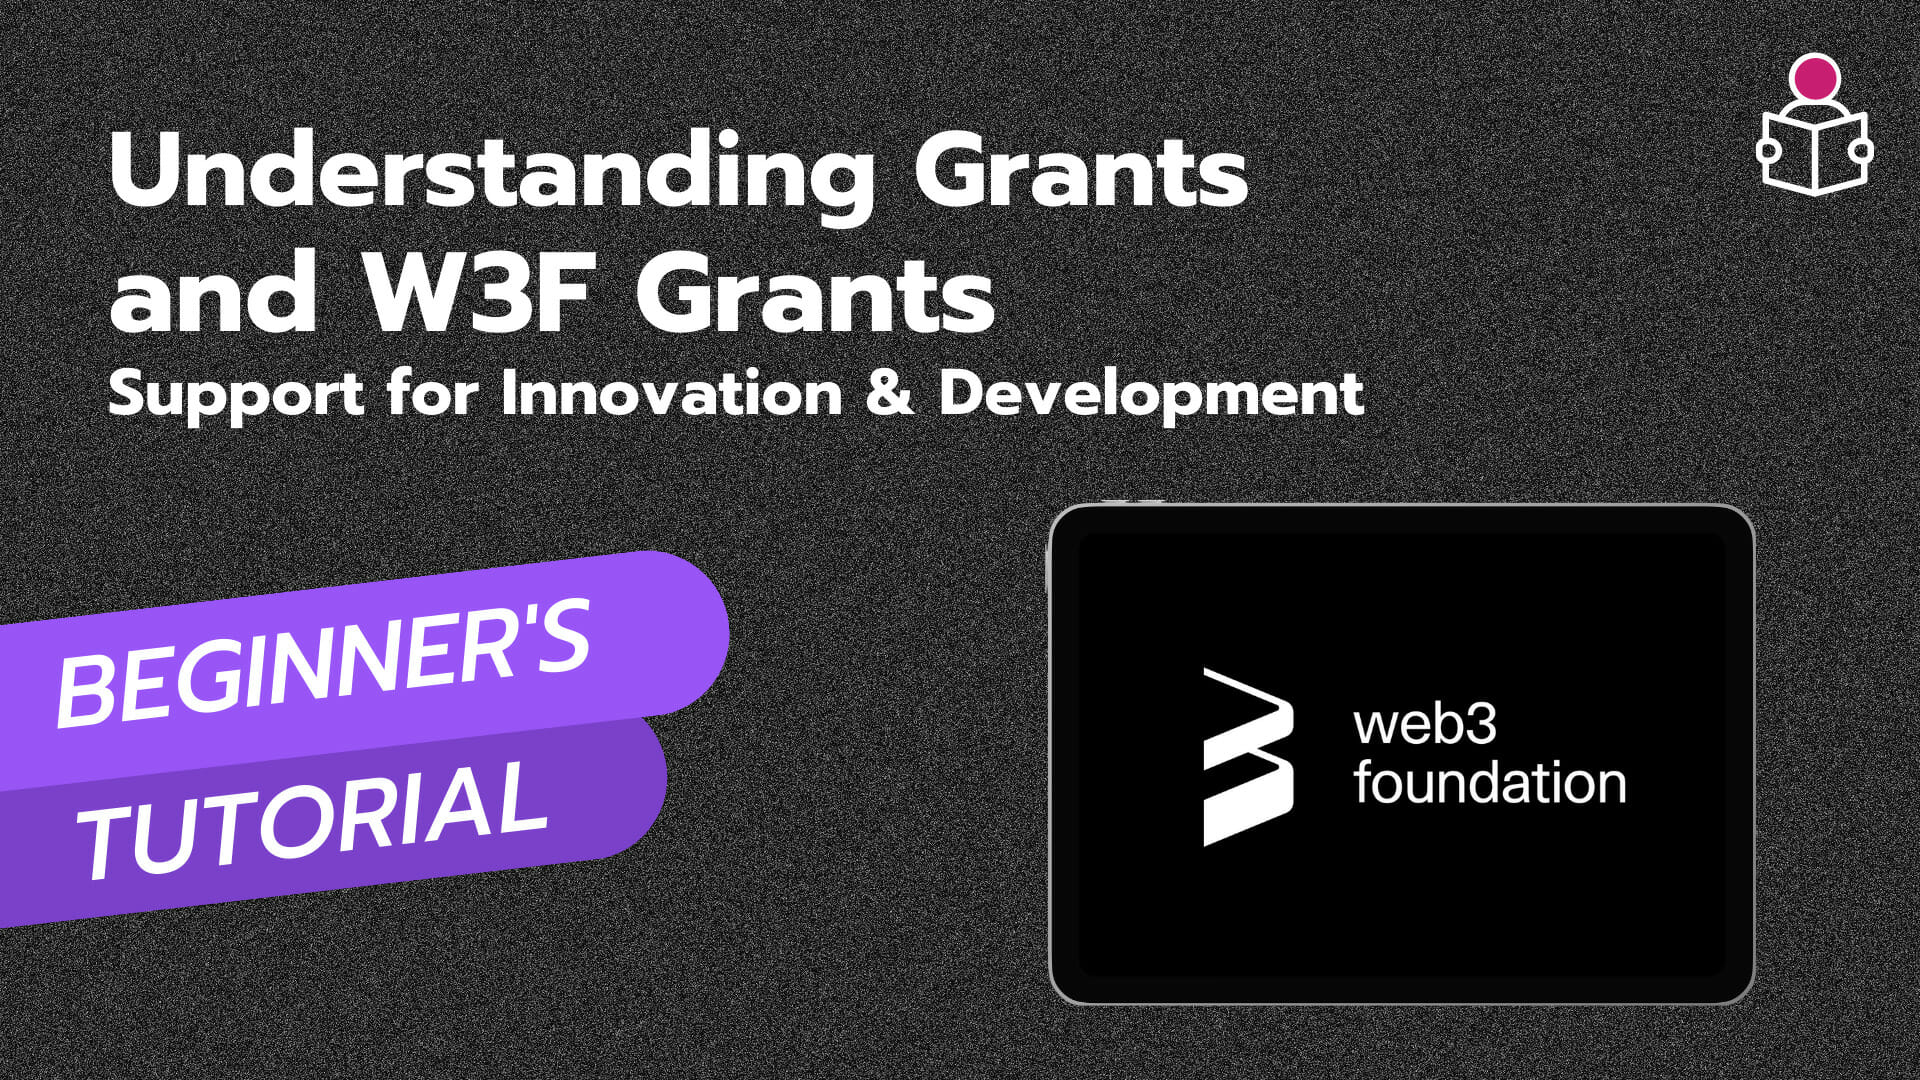 Understanding Grants and W3F Grants Support for Innovation & Development - Describedot